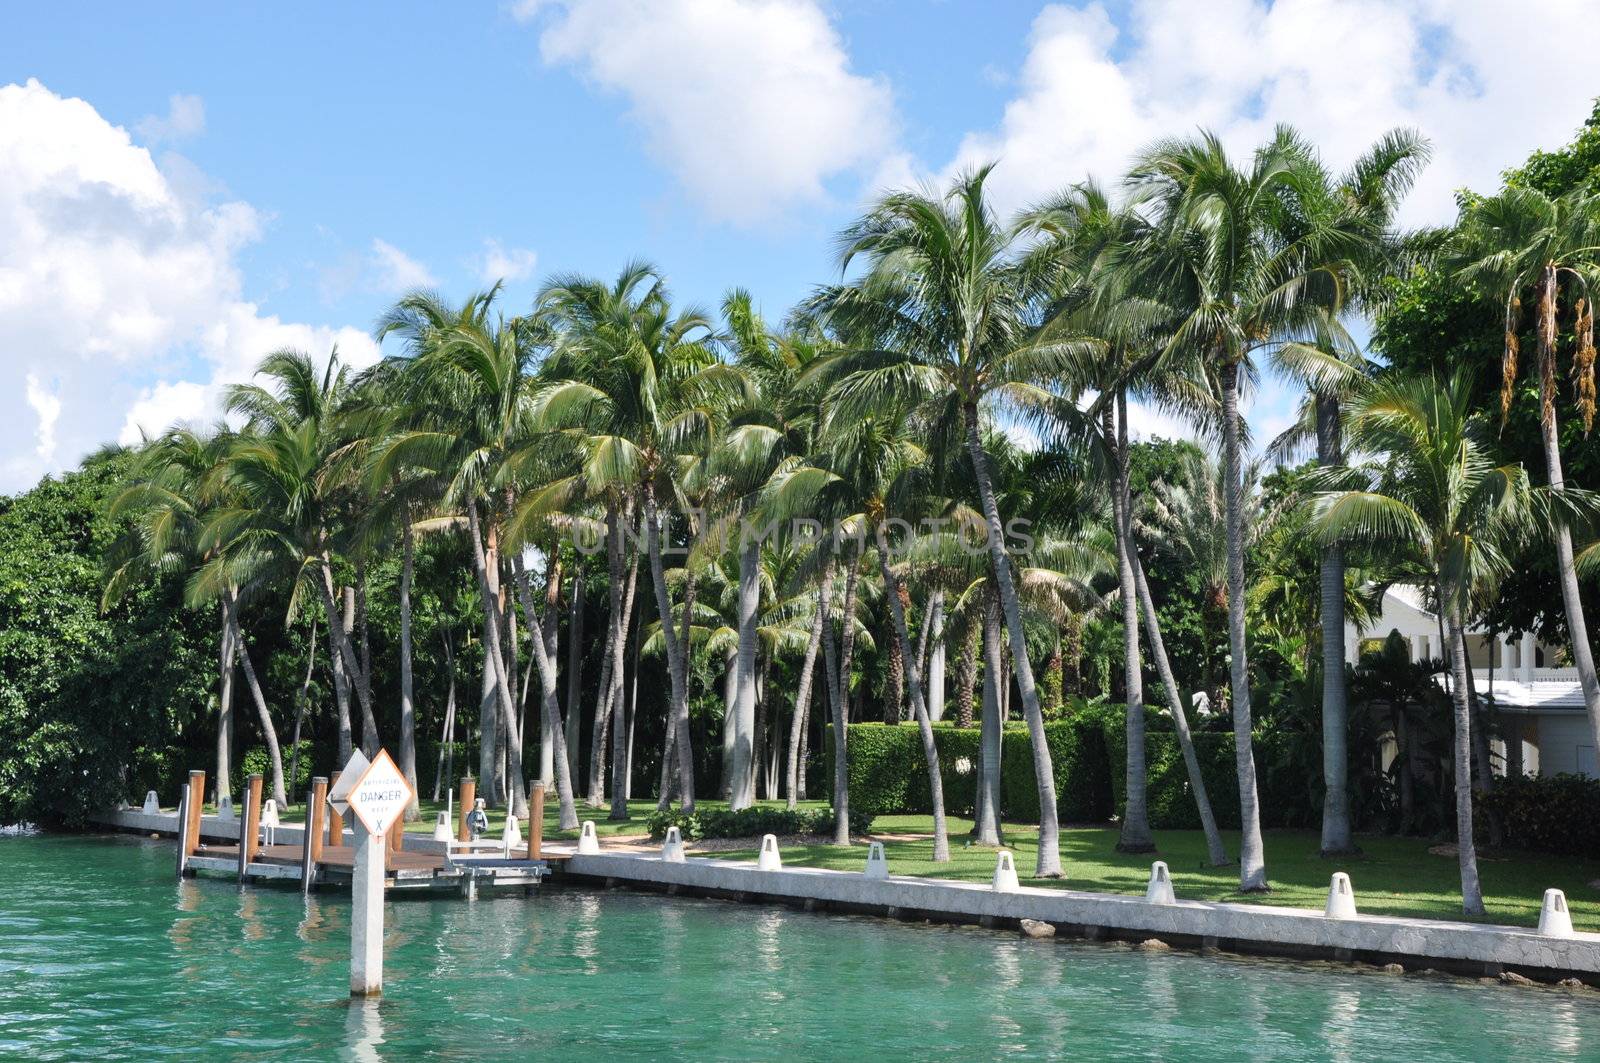 Star & Palm Islands in Miami by sainaniritu